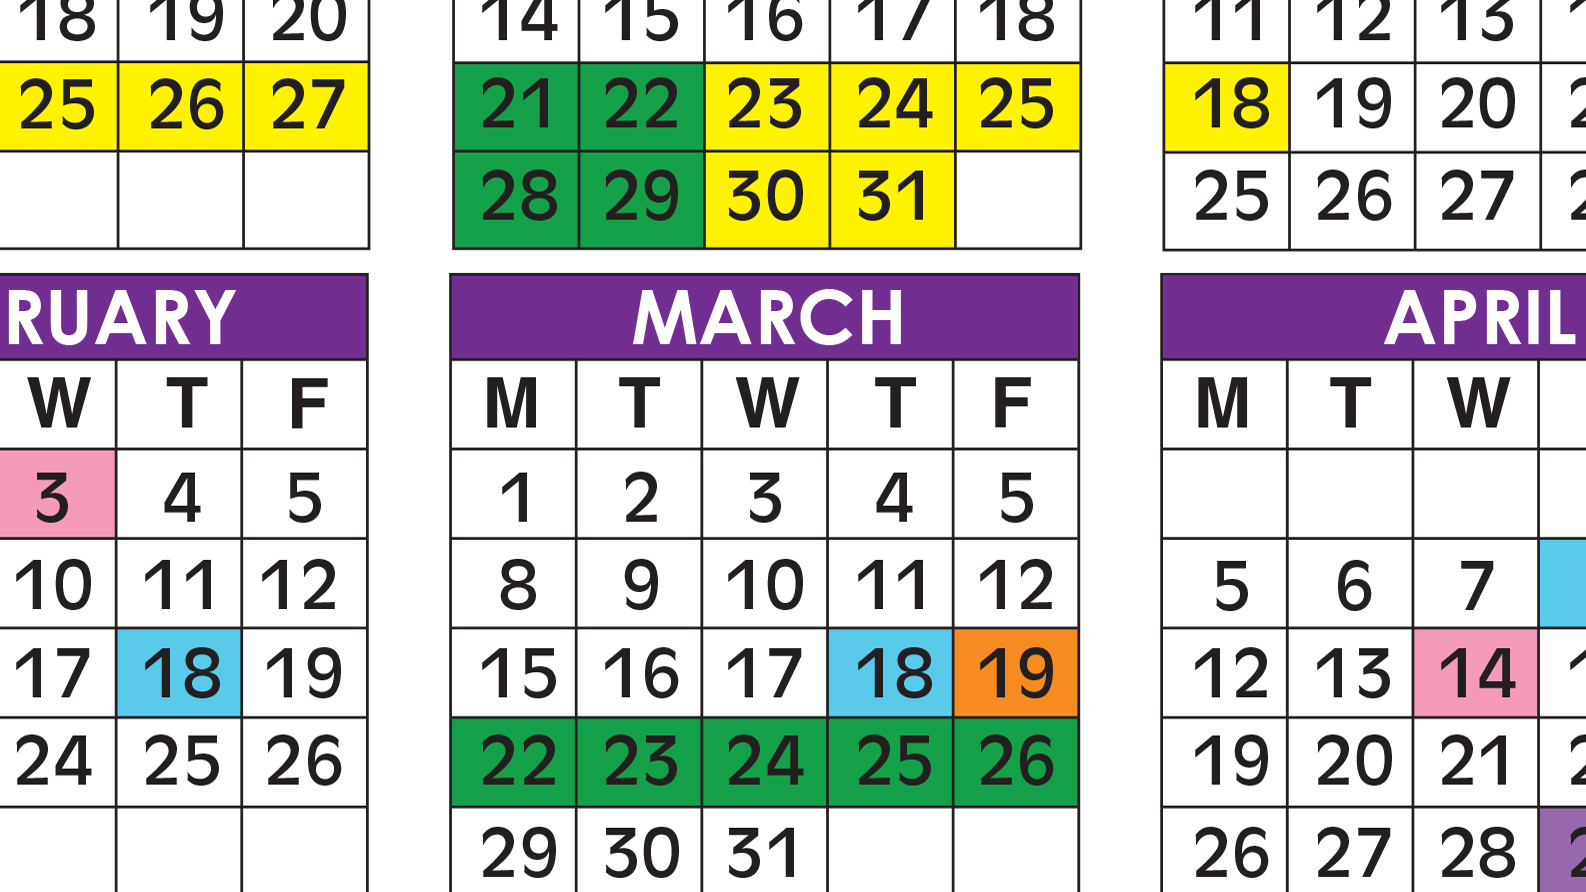 broward schools calendar 2021 Official 2020 21 Broward County Public Schools Color Calendar Parkland Talk broward schools calendar 2021